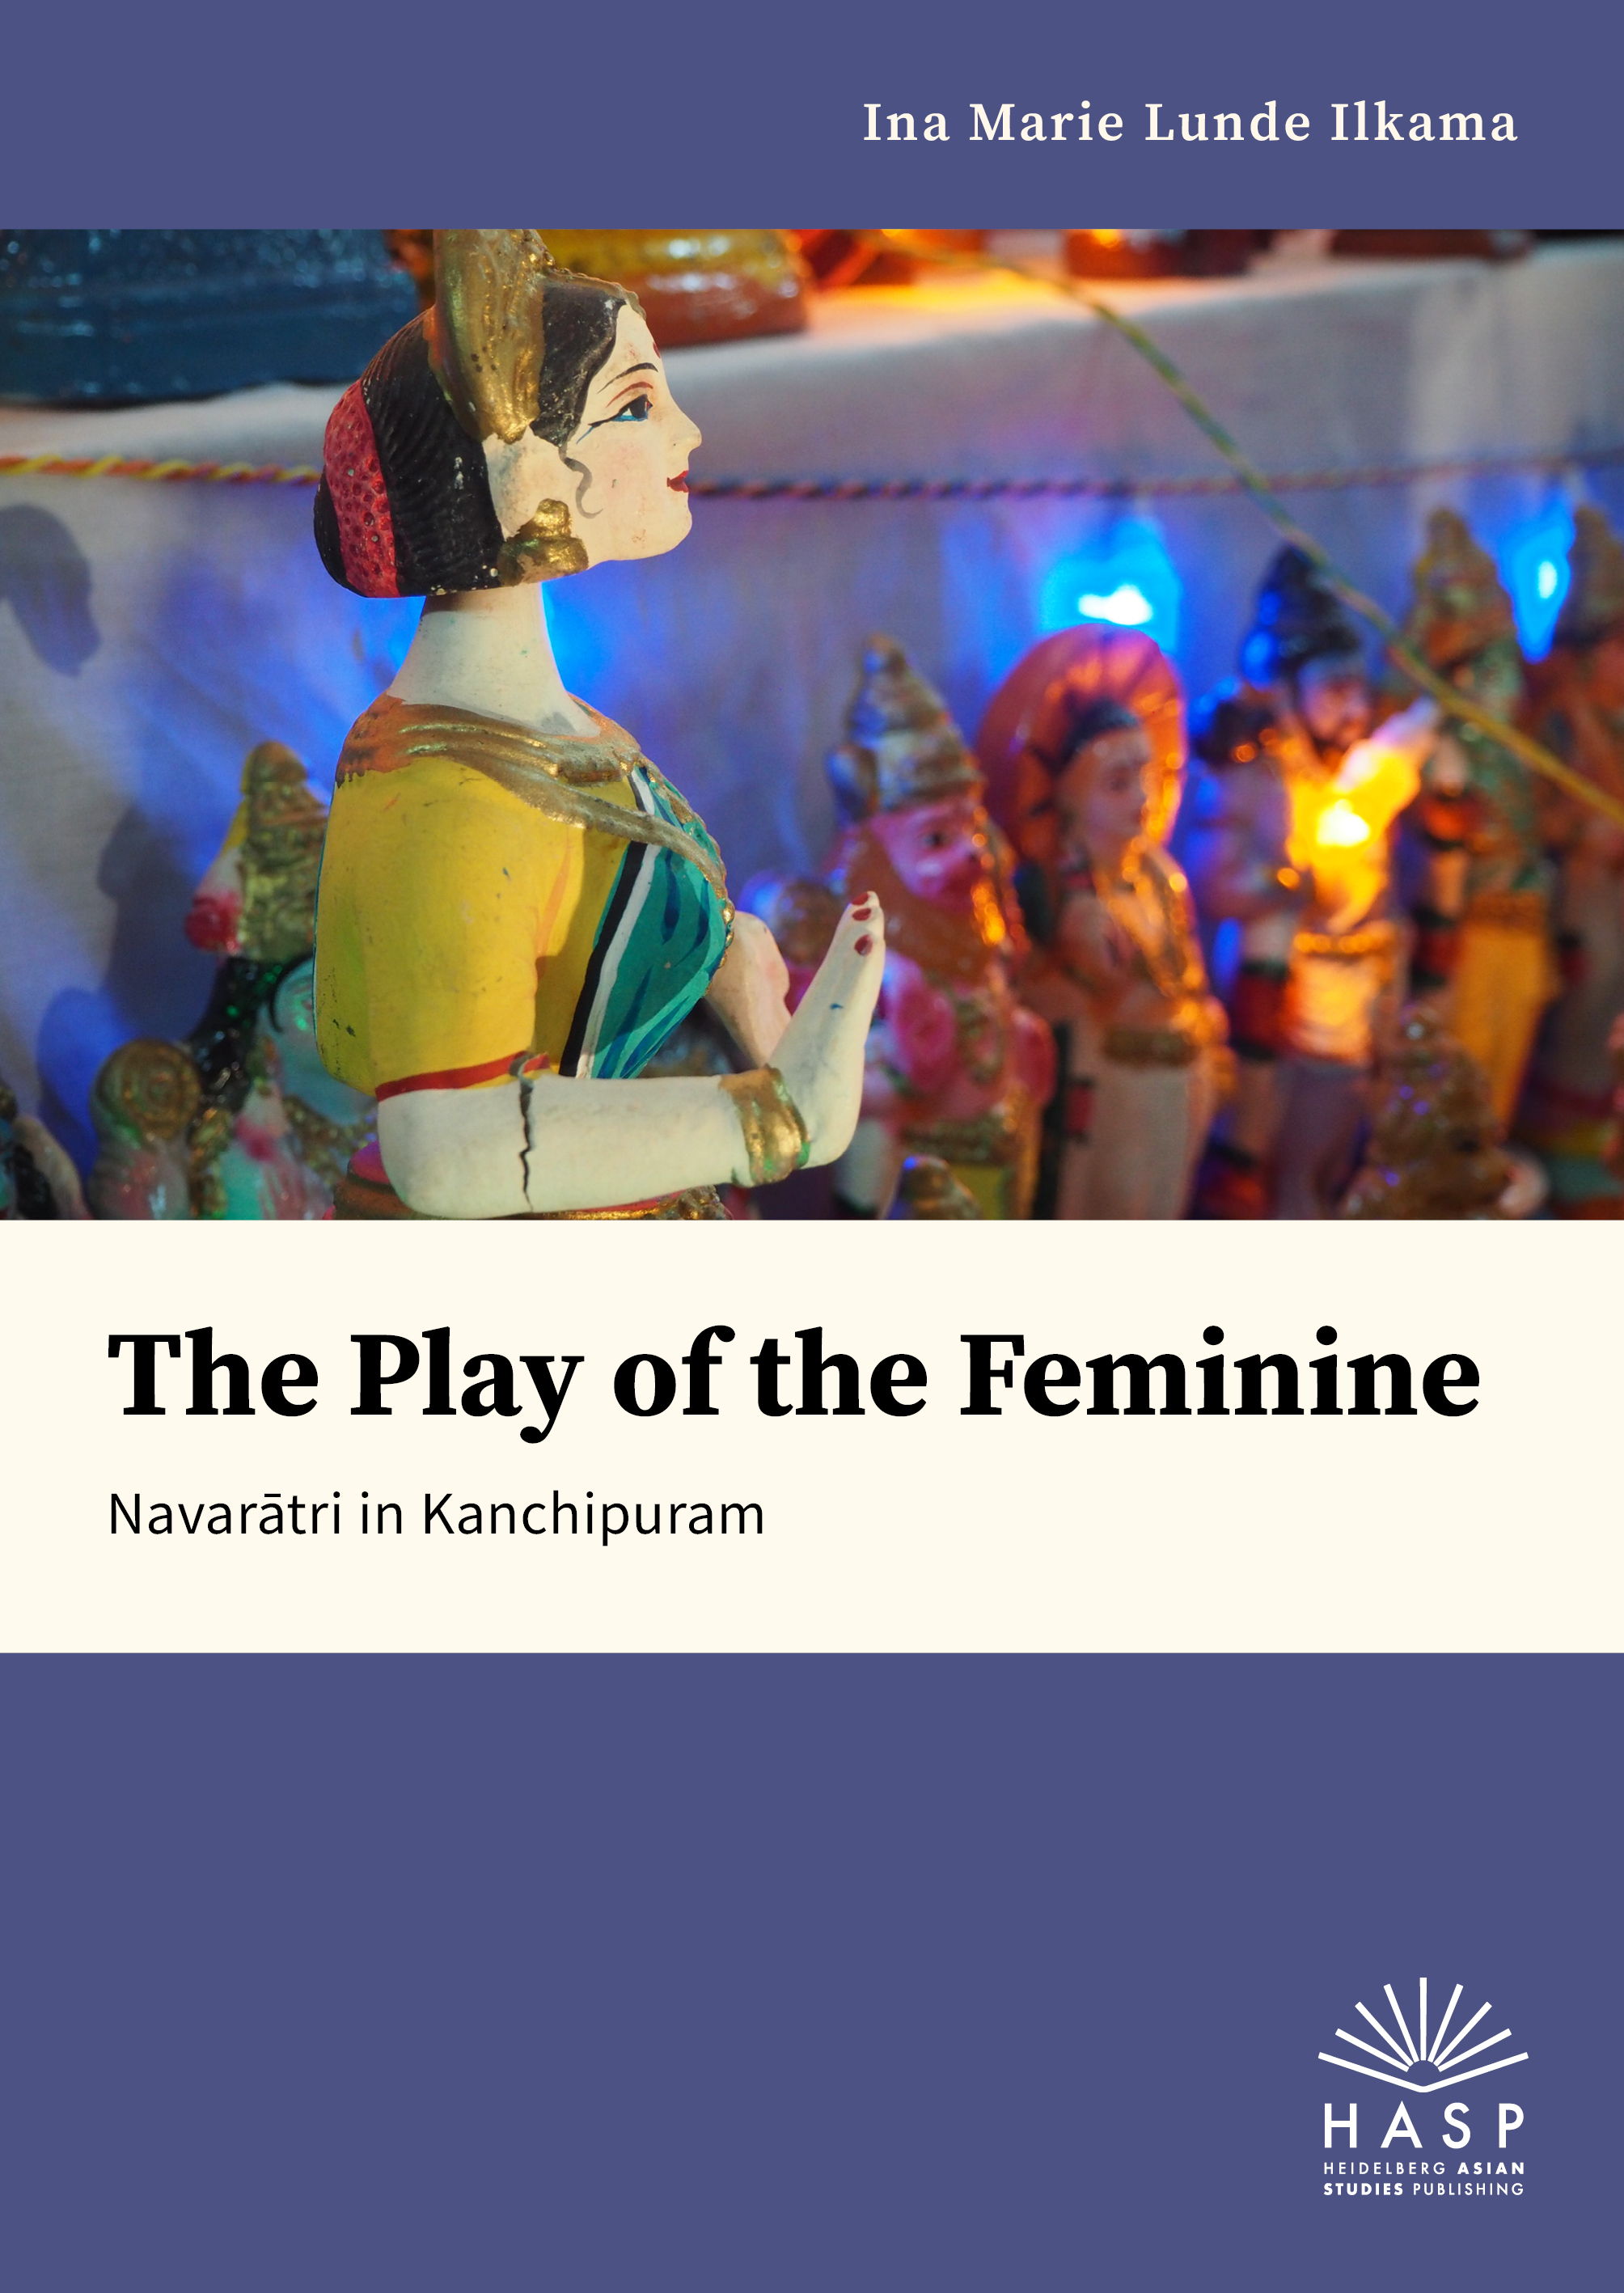 Buchcover von The Play of the Feminine